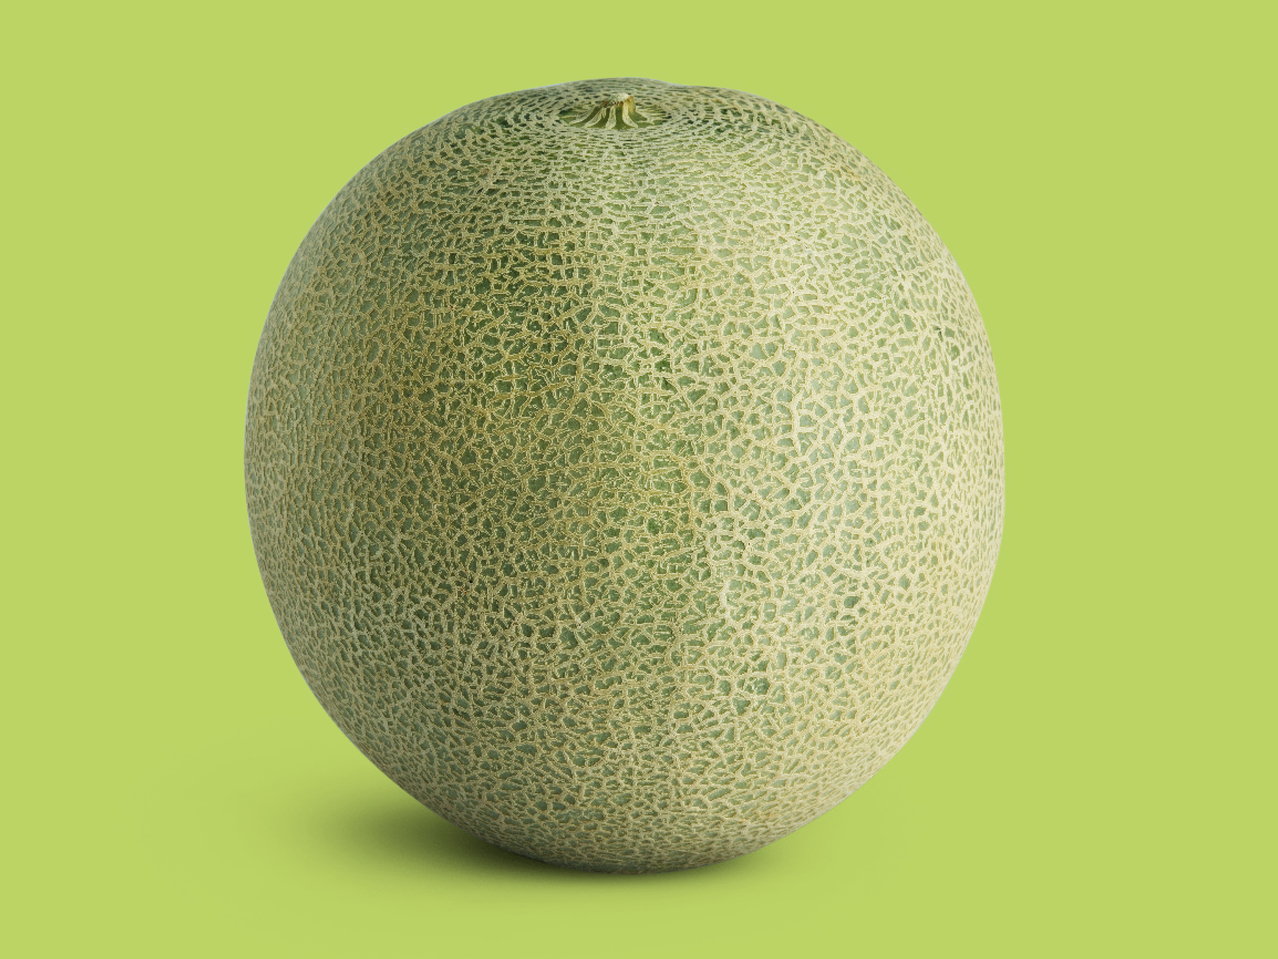 Cantaloupe Melon1